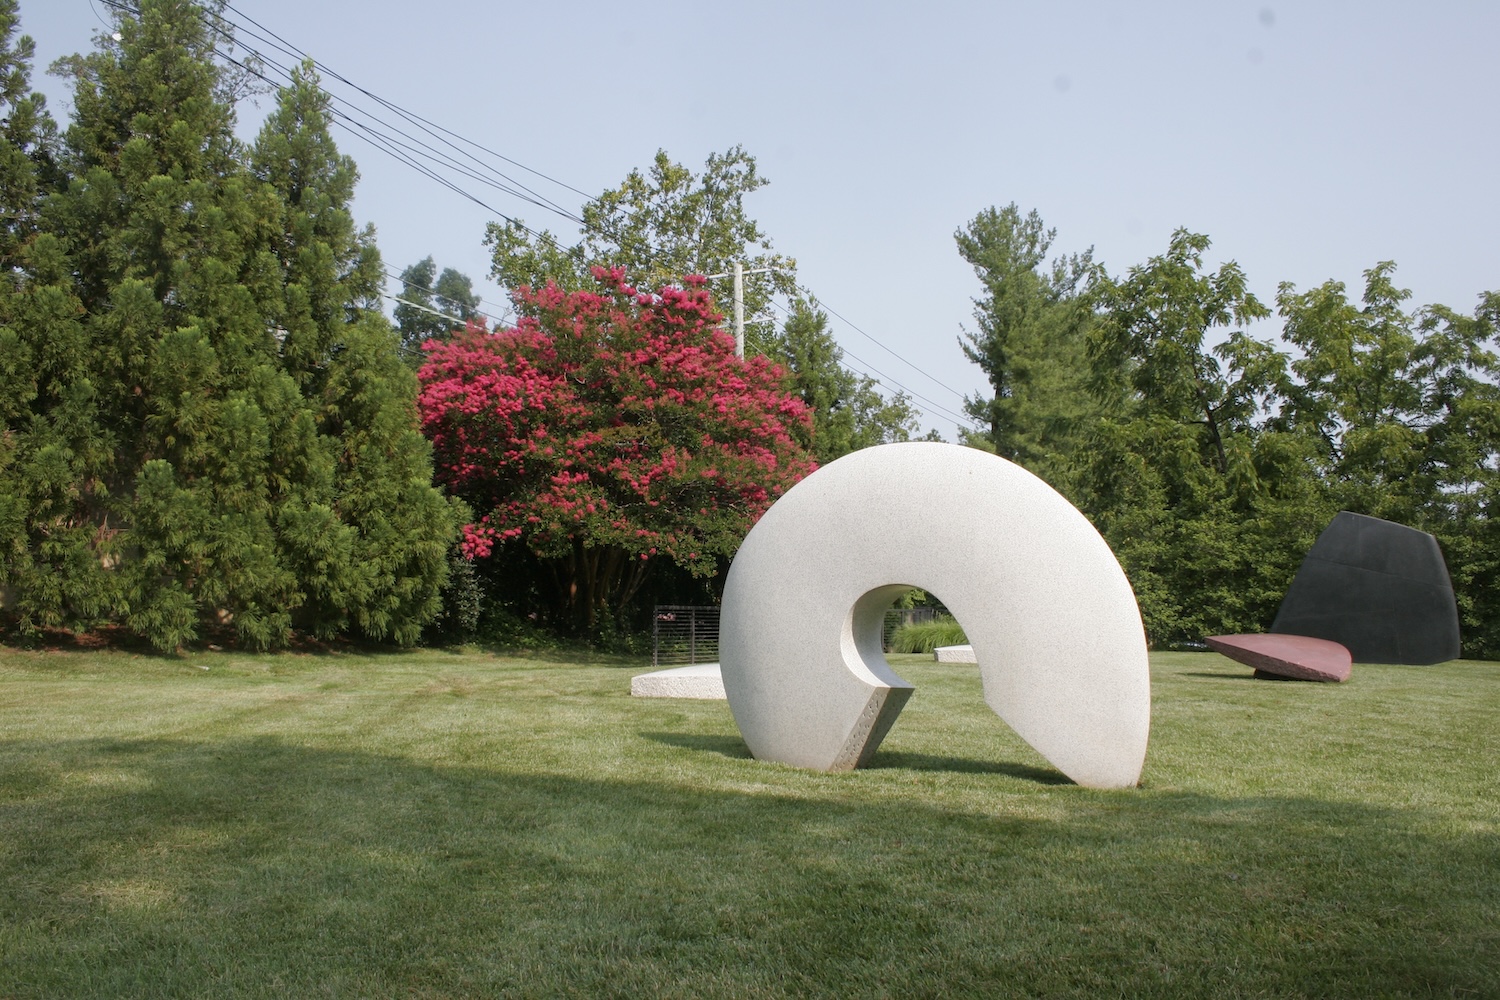 white round sculpture in a garden, trees, one red tree, grass